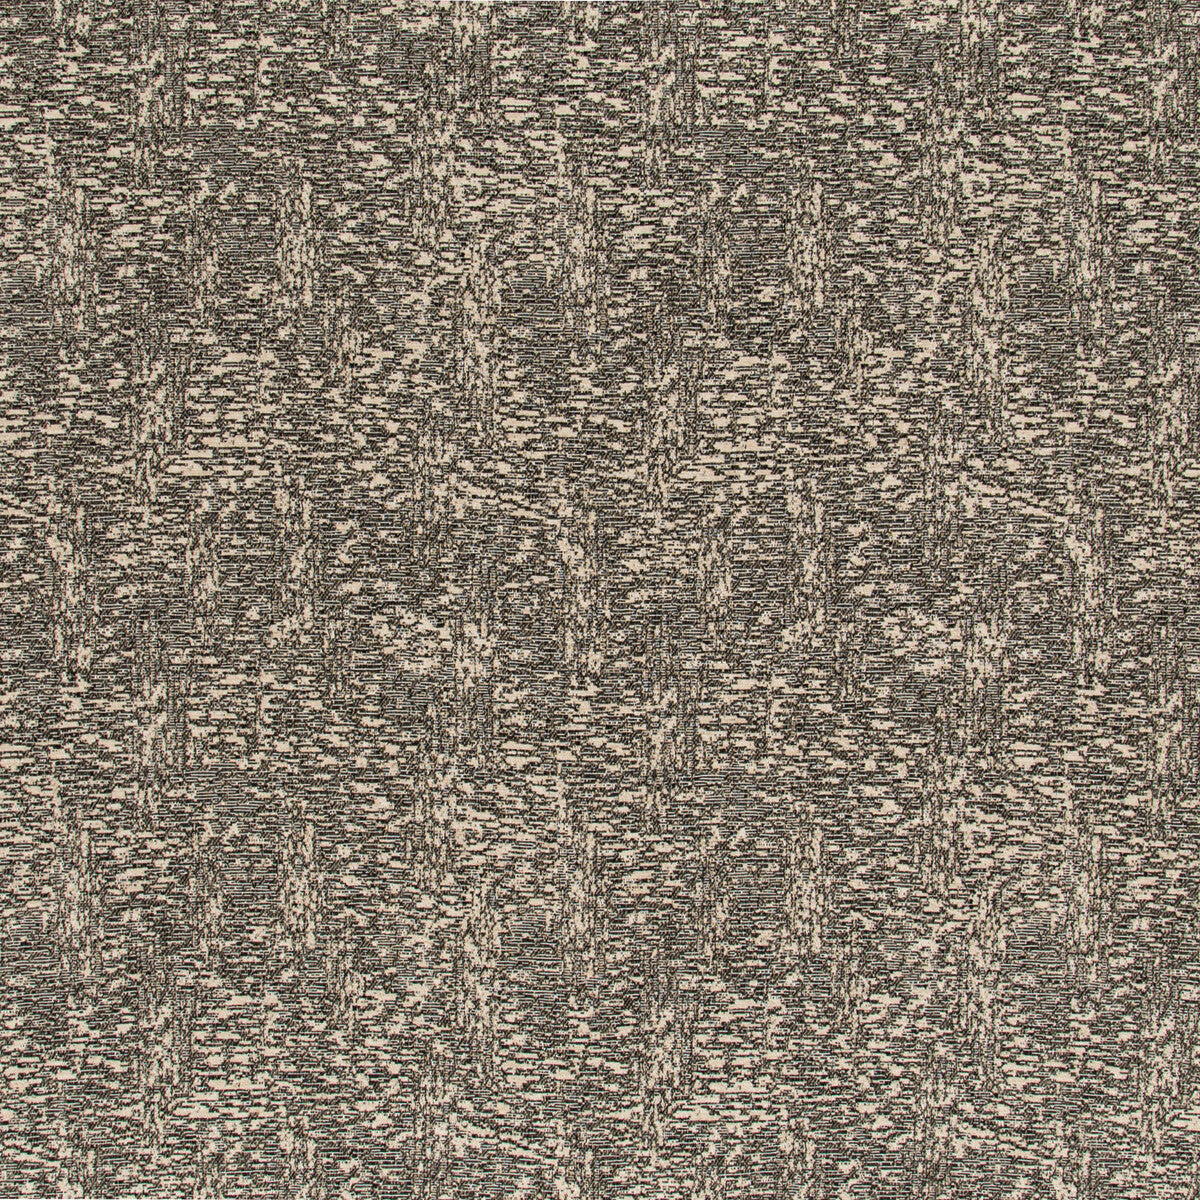 Lj Grw fabric - pattern 2019146.168.0 - by Lee Jofa Modern in the Kw Terra Firma III Indoor Outdoor collection